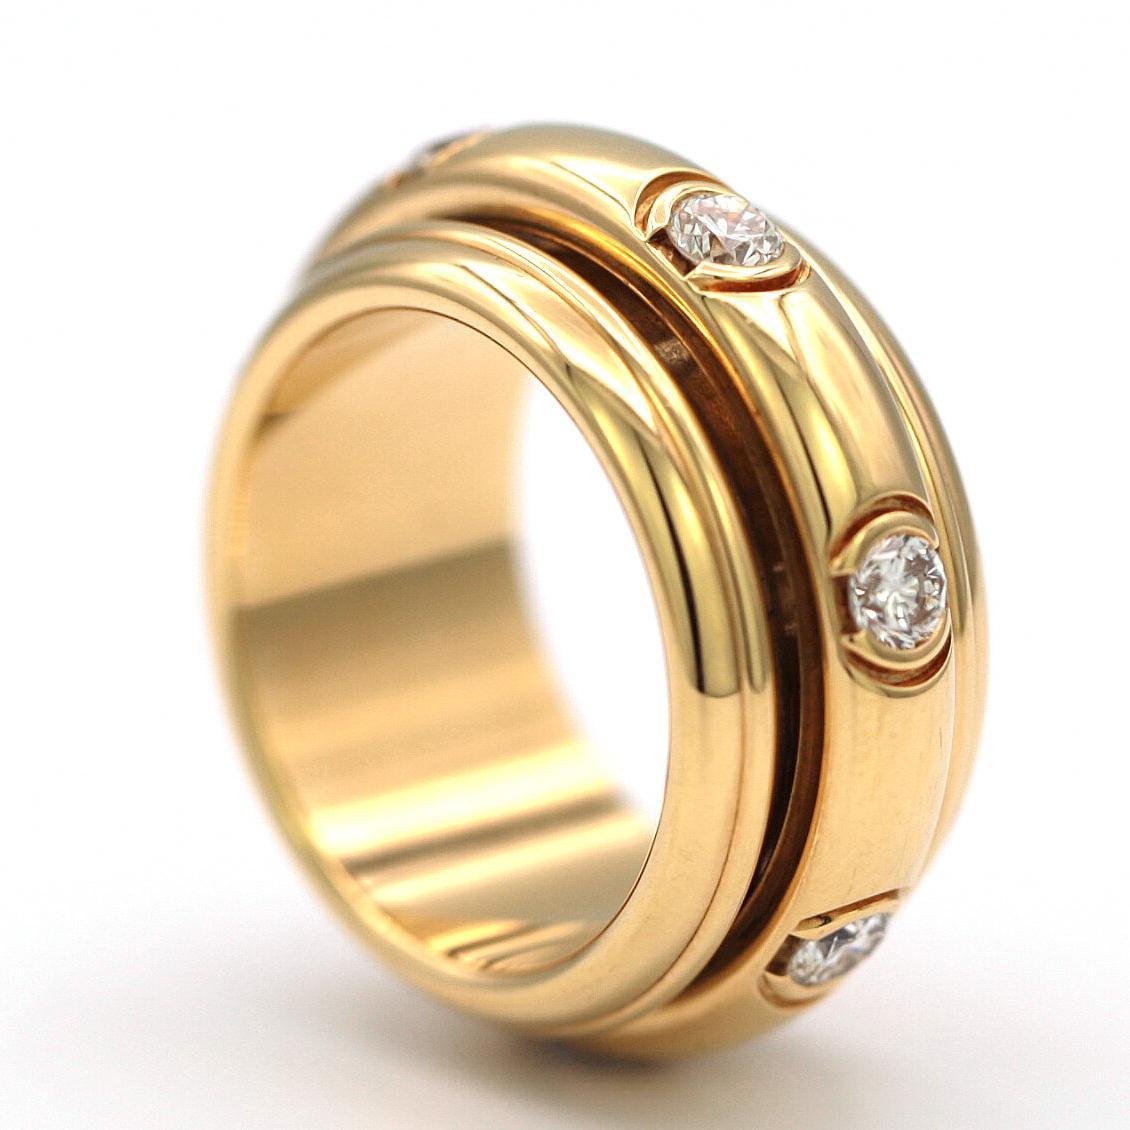 Piaget Possession Ring in 18 Karat Yellow Gold with Diamonds UpperLuxury